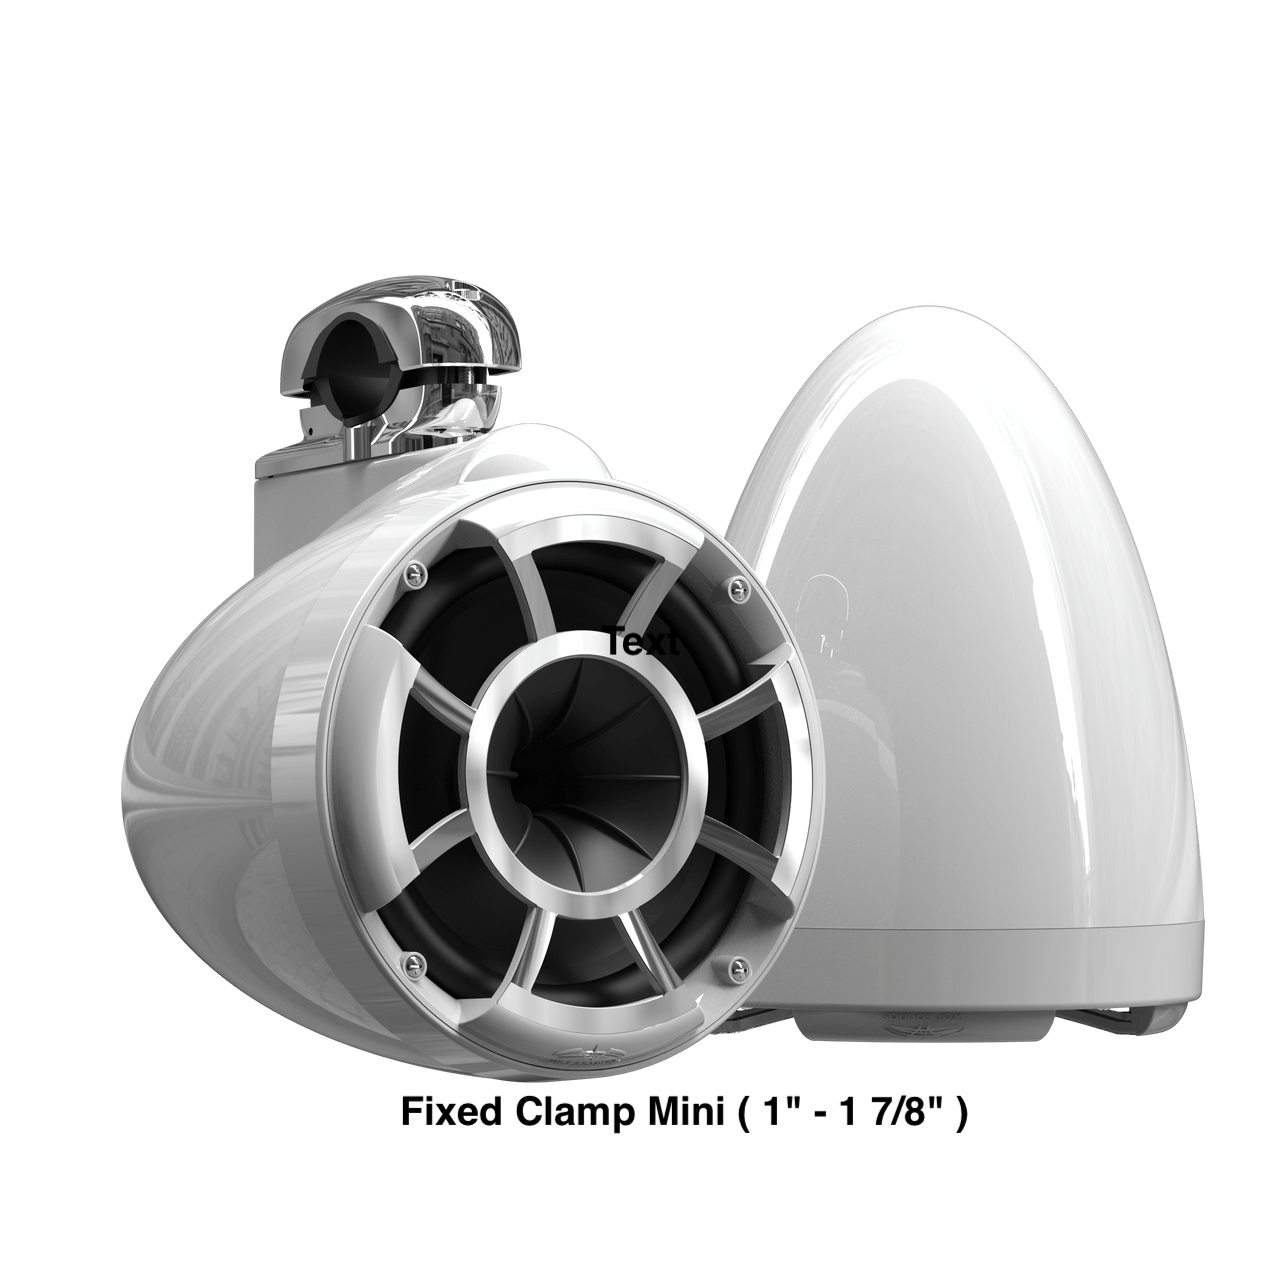 Wet Sounds Boat Wake Tower Speakers Fixed Clamp Mini ( 1" - 1 7/8" ) Wet Sounds  REV10™ White V2 | Revolution Series 10" White Tower Speakers